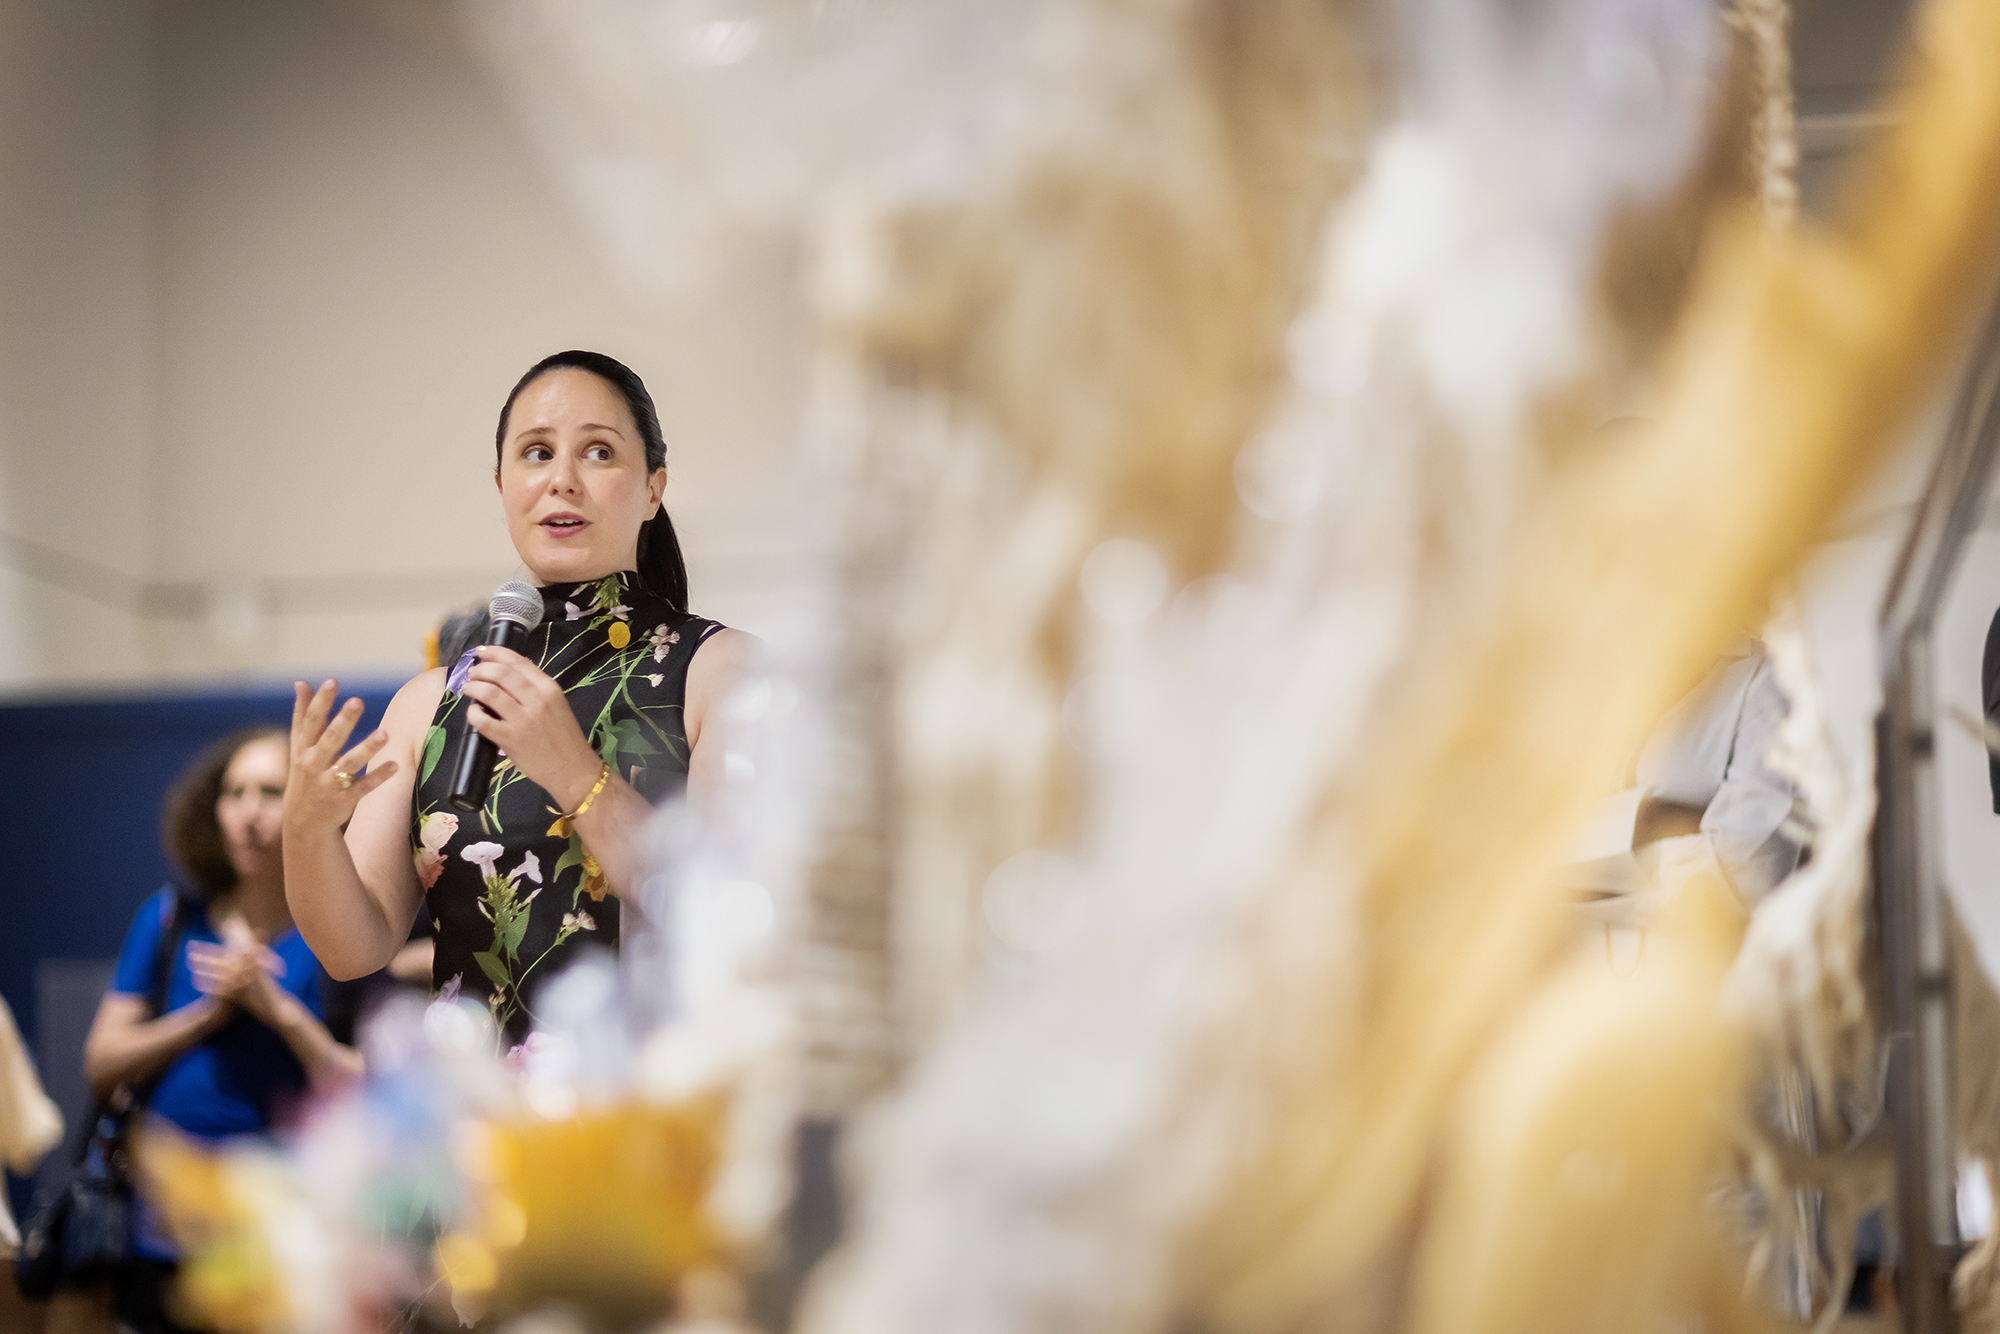 Curator Emily Zimmerman standing in gallery speaking into microphone